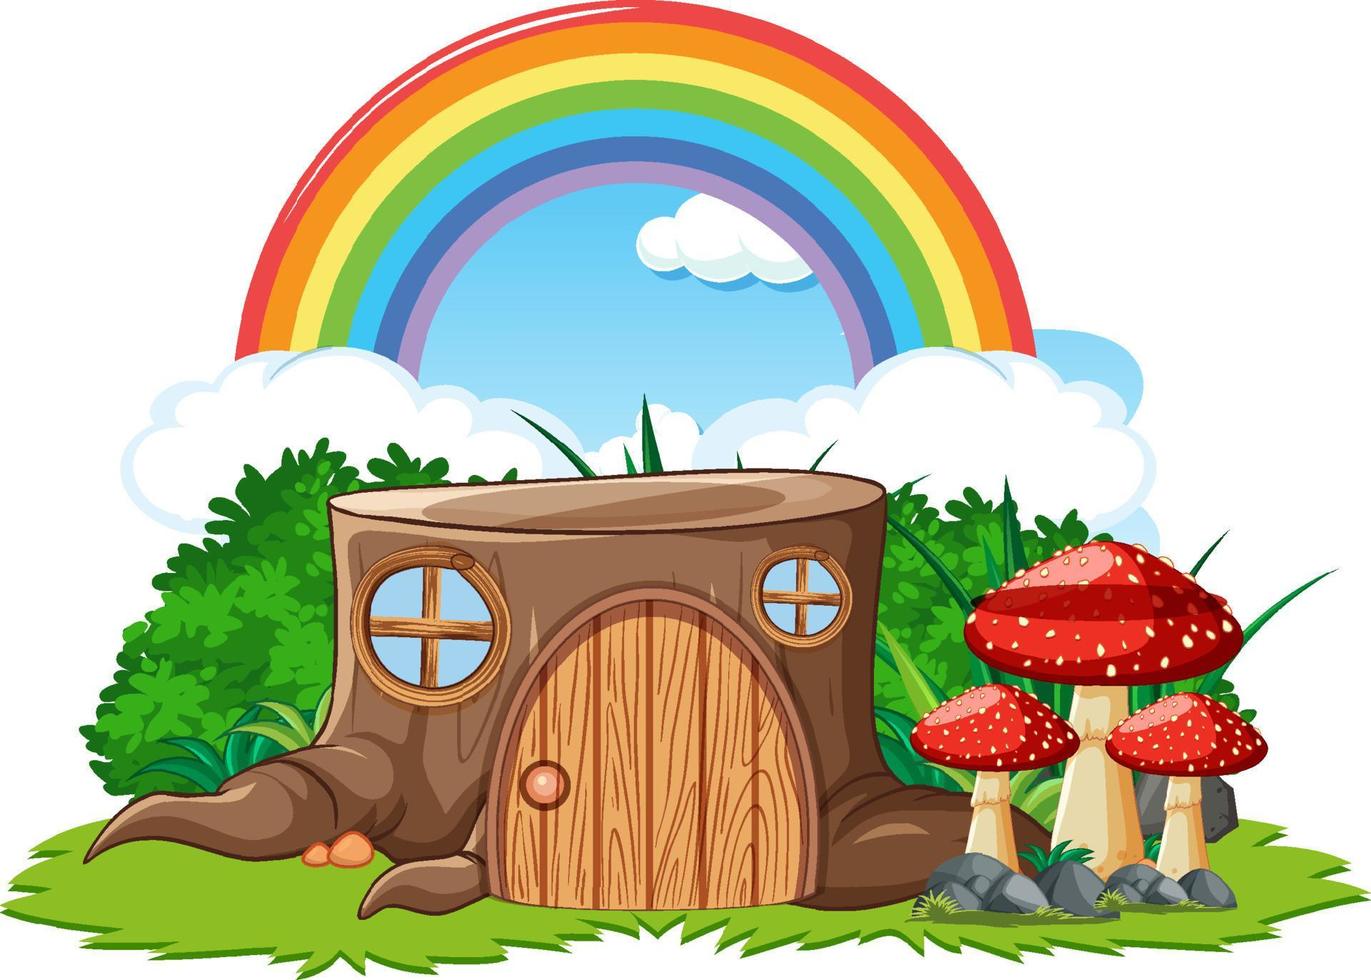 Fantasy-Stumpfhaus mit Regenbogen am Himmel vektor